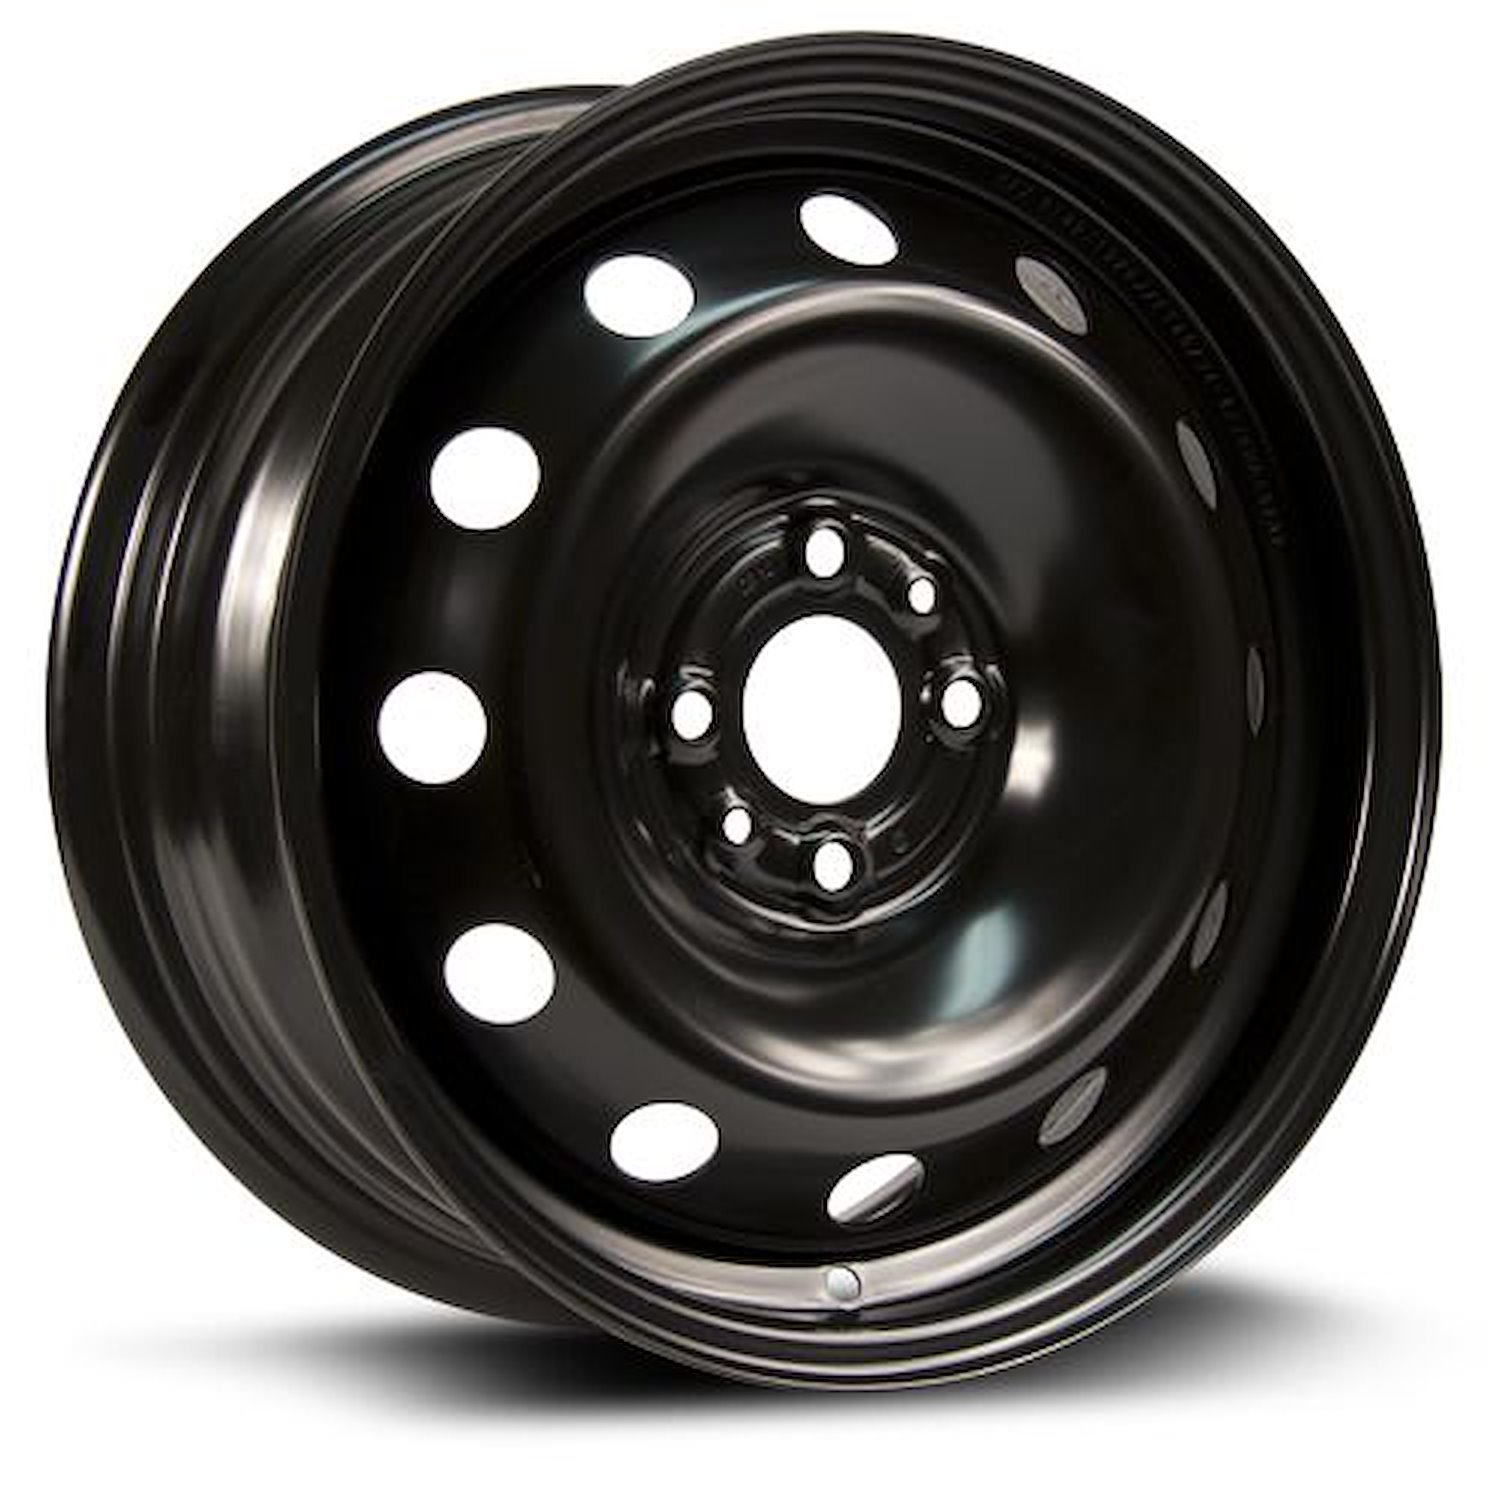 X47500 Steel Wheel [Size: 15" x 6"] Black Finish